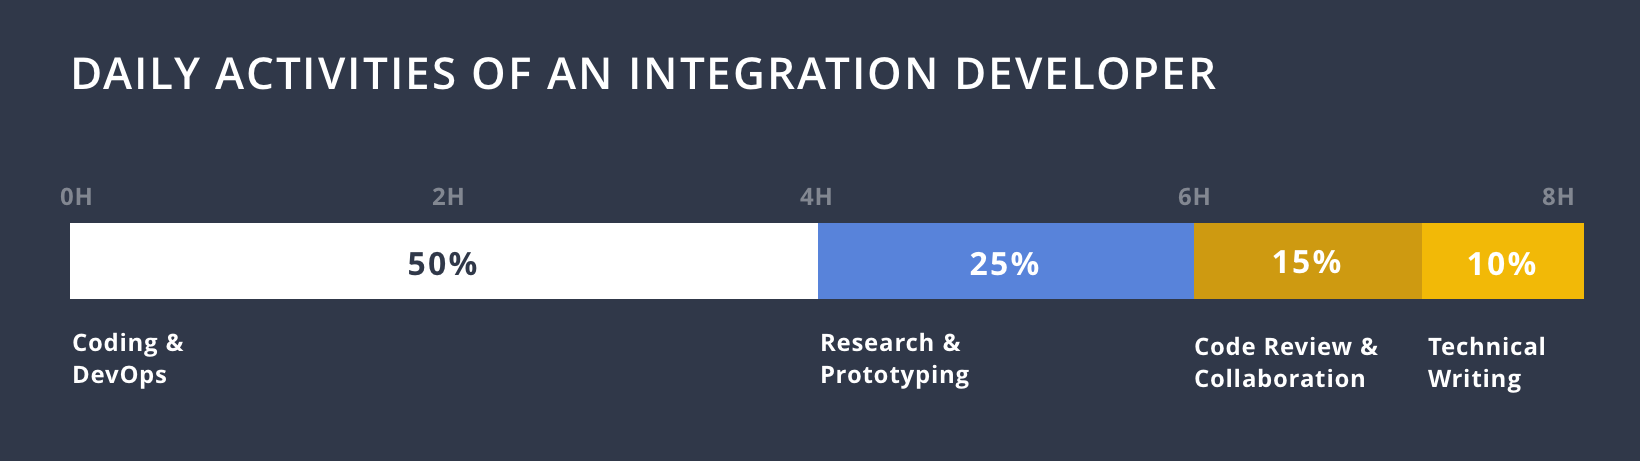 Daily activity breakdown of Maltego Integration Developers